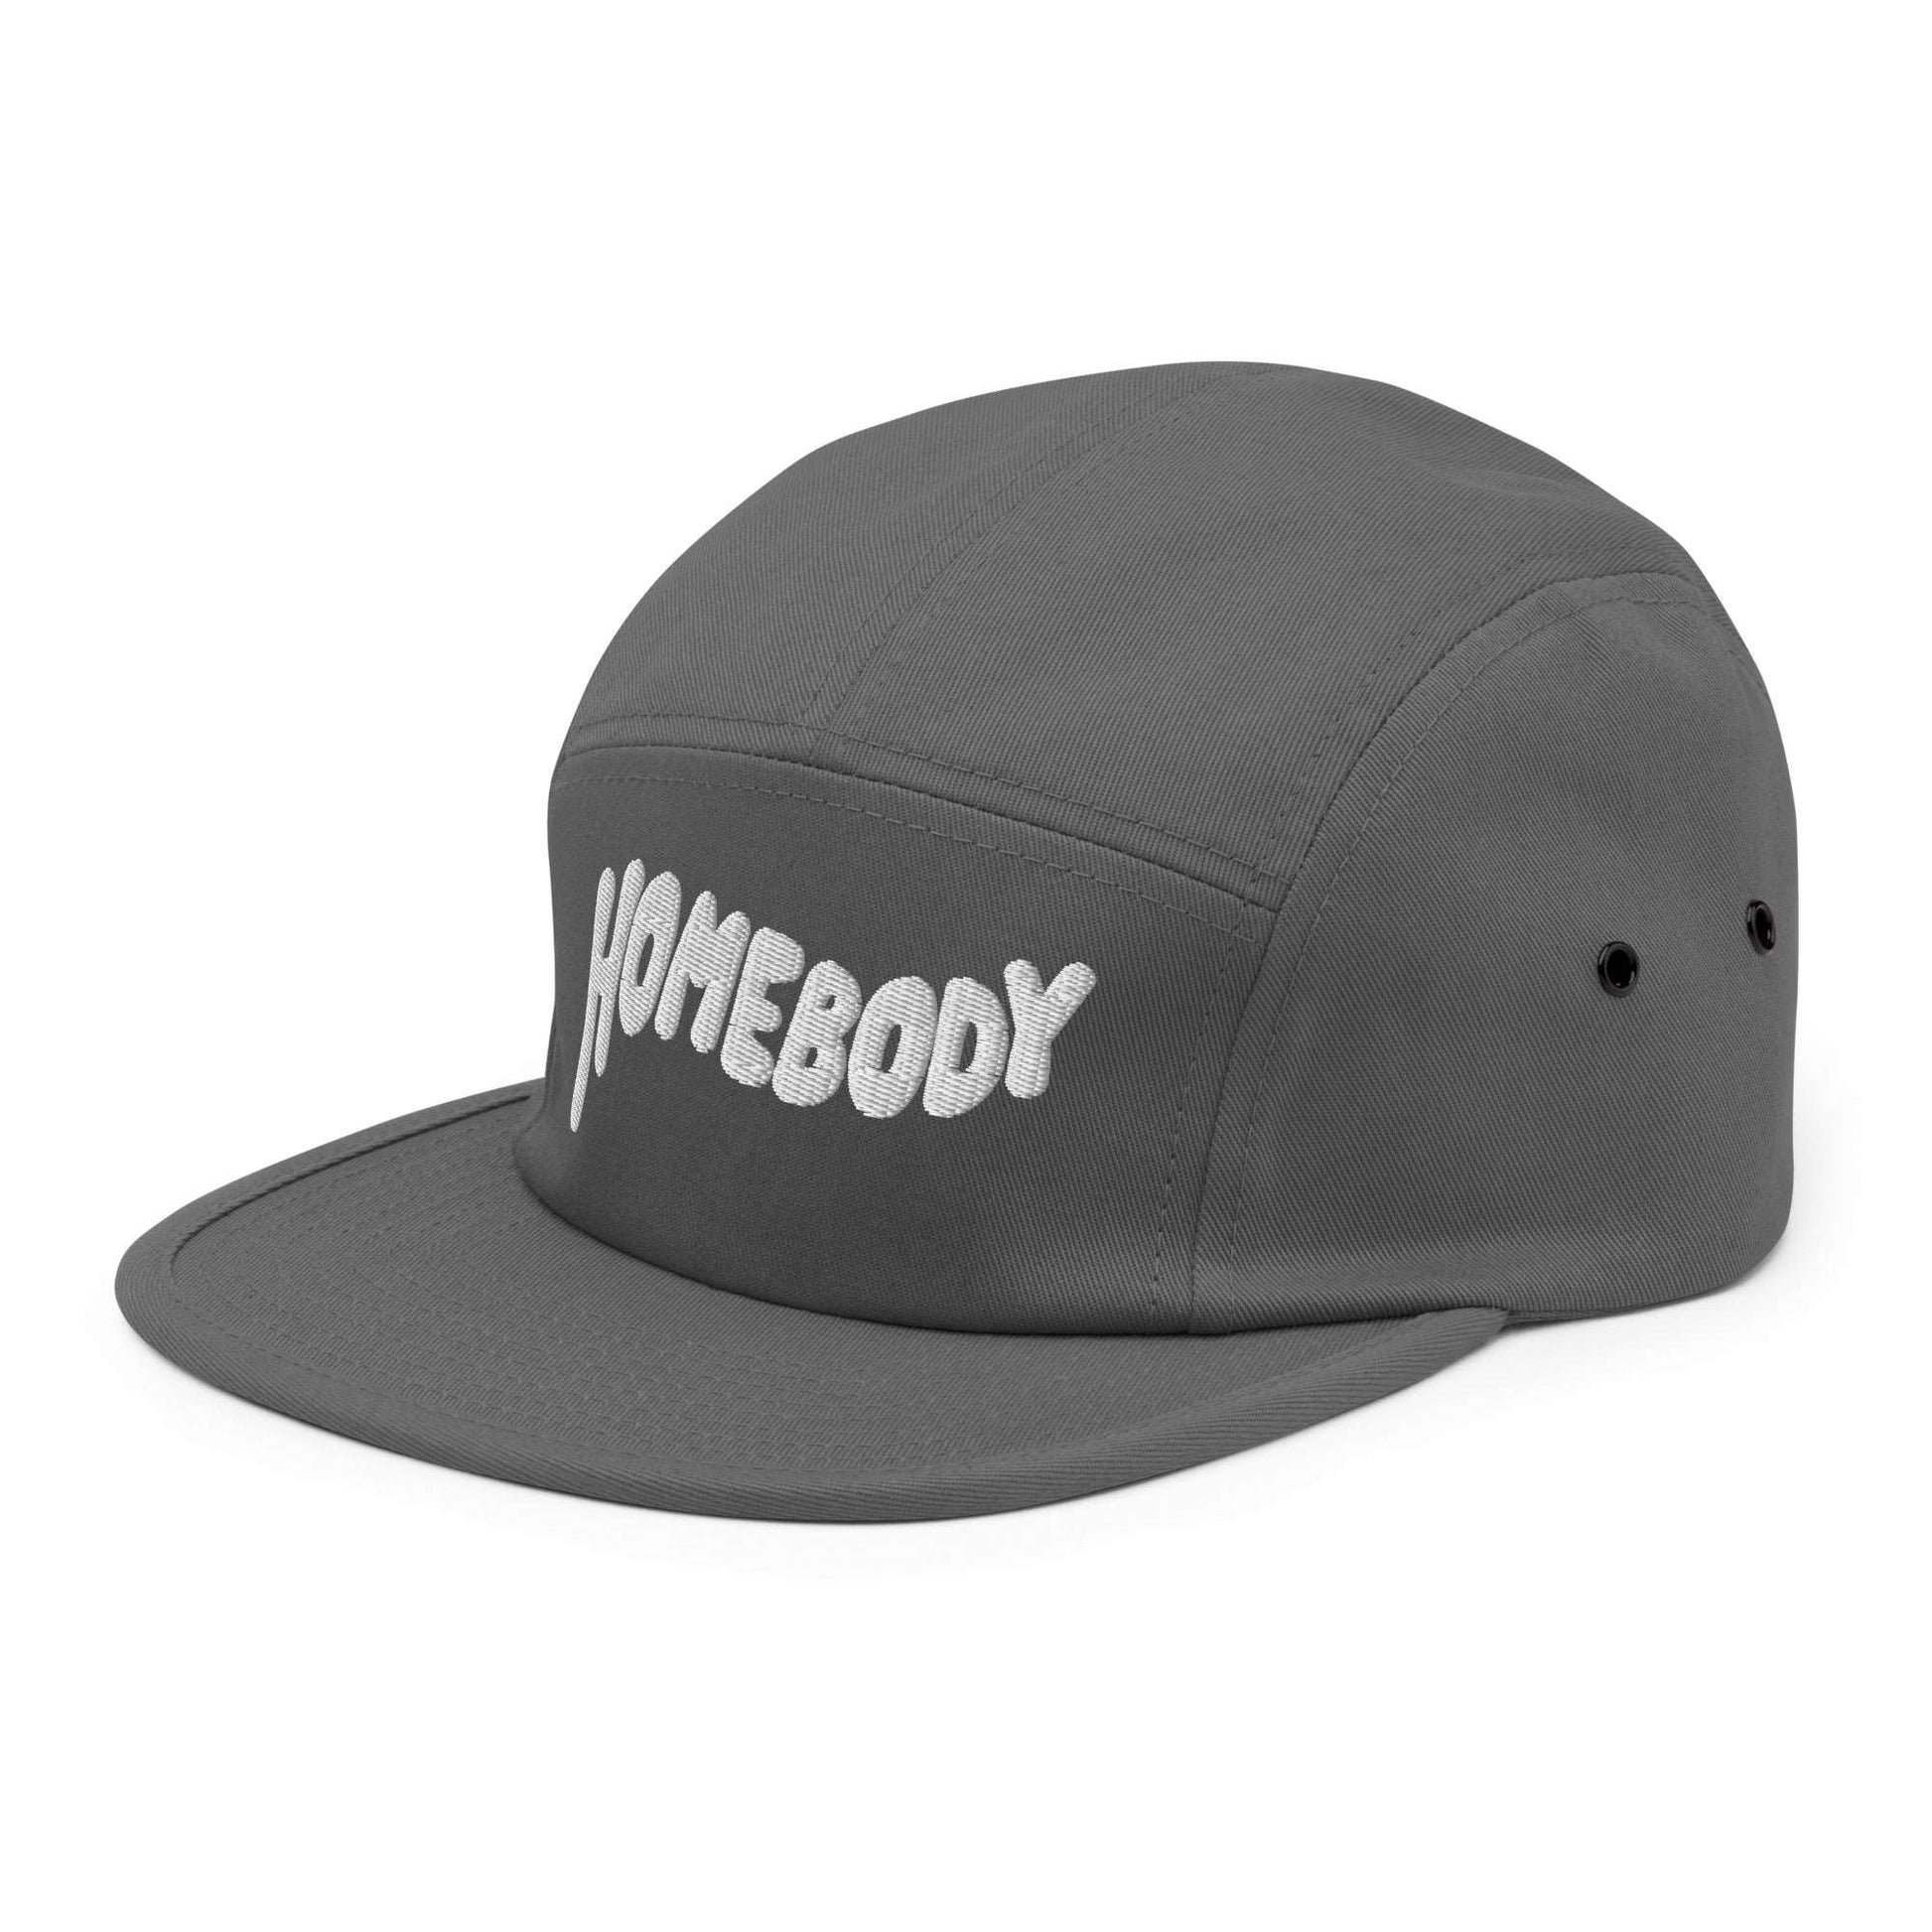 Homebody Hat